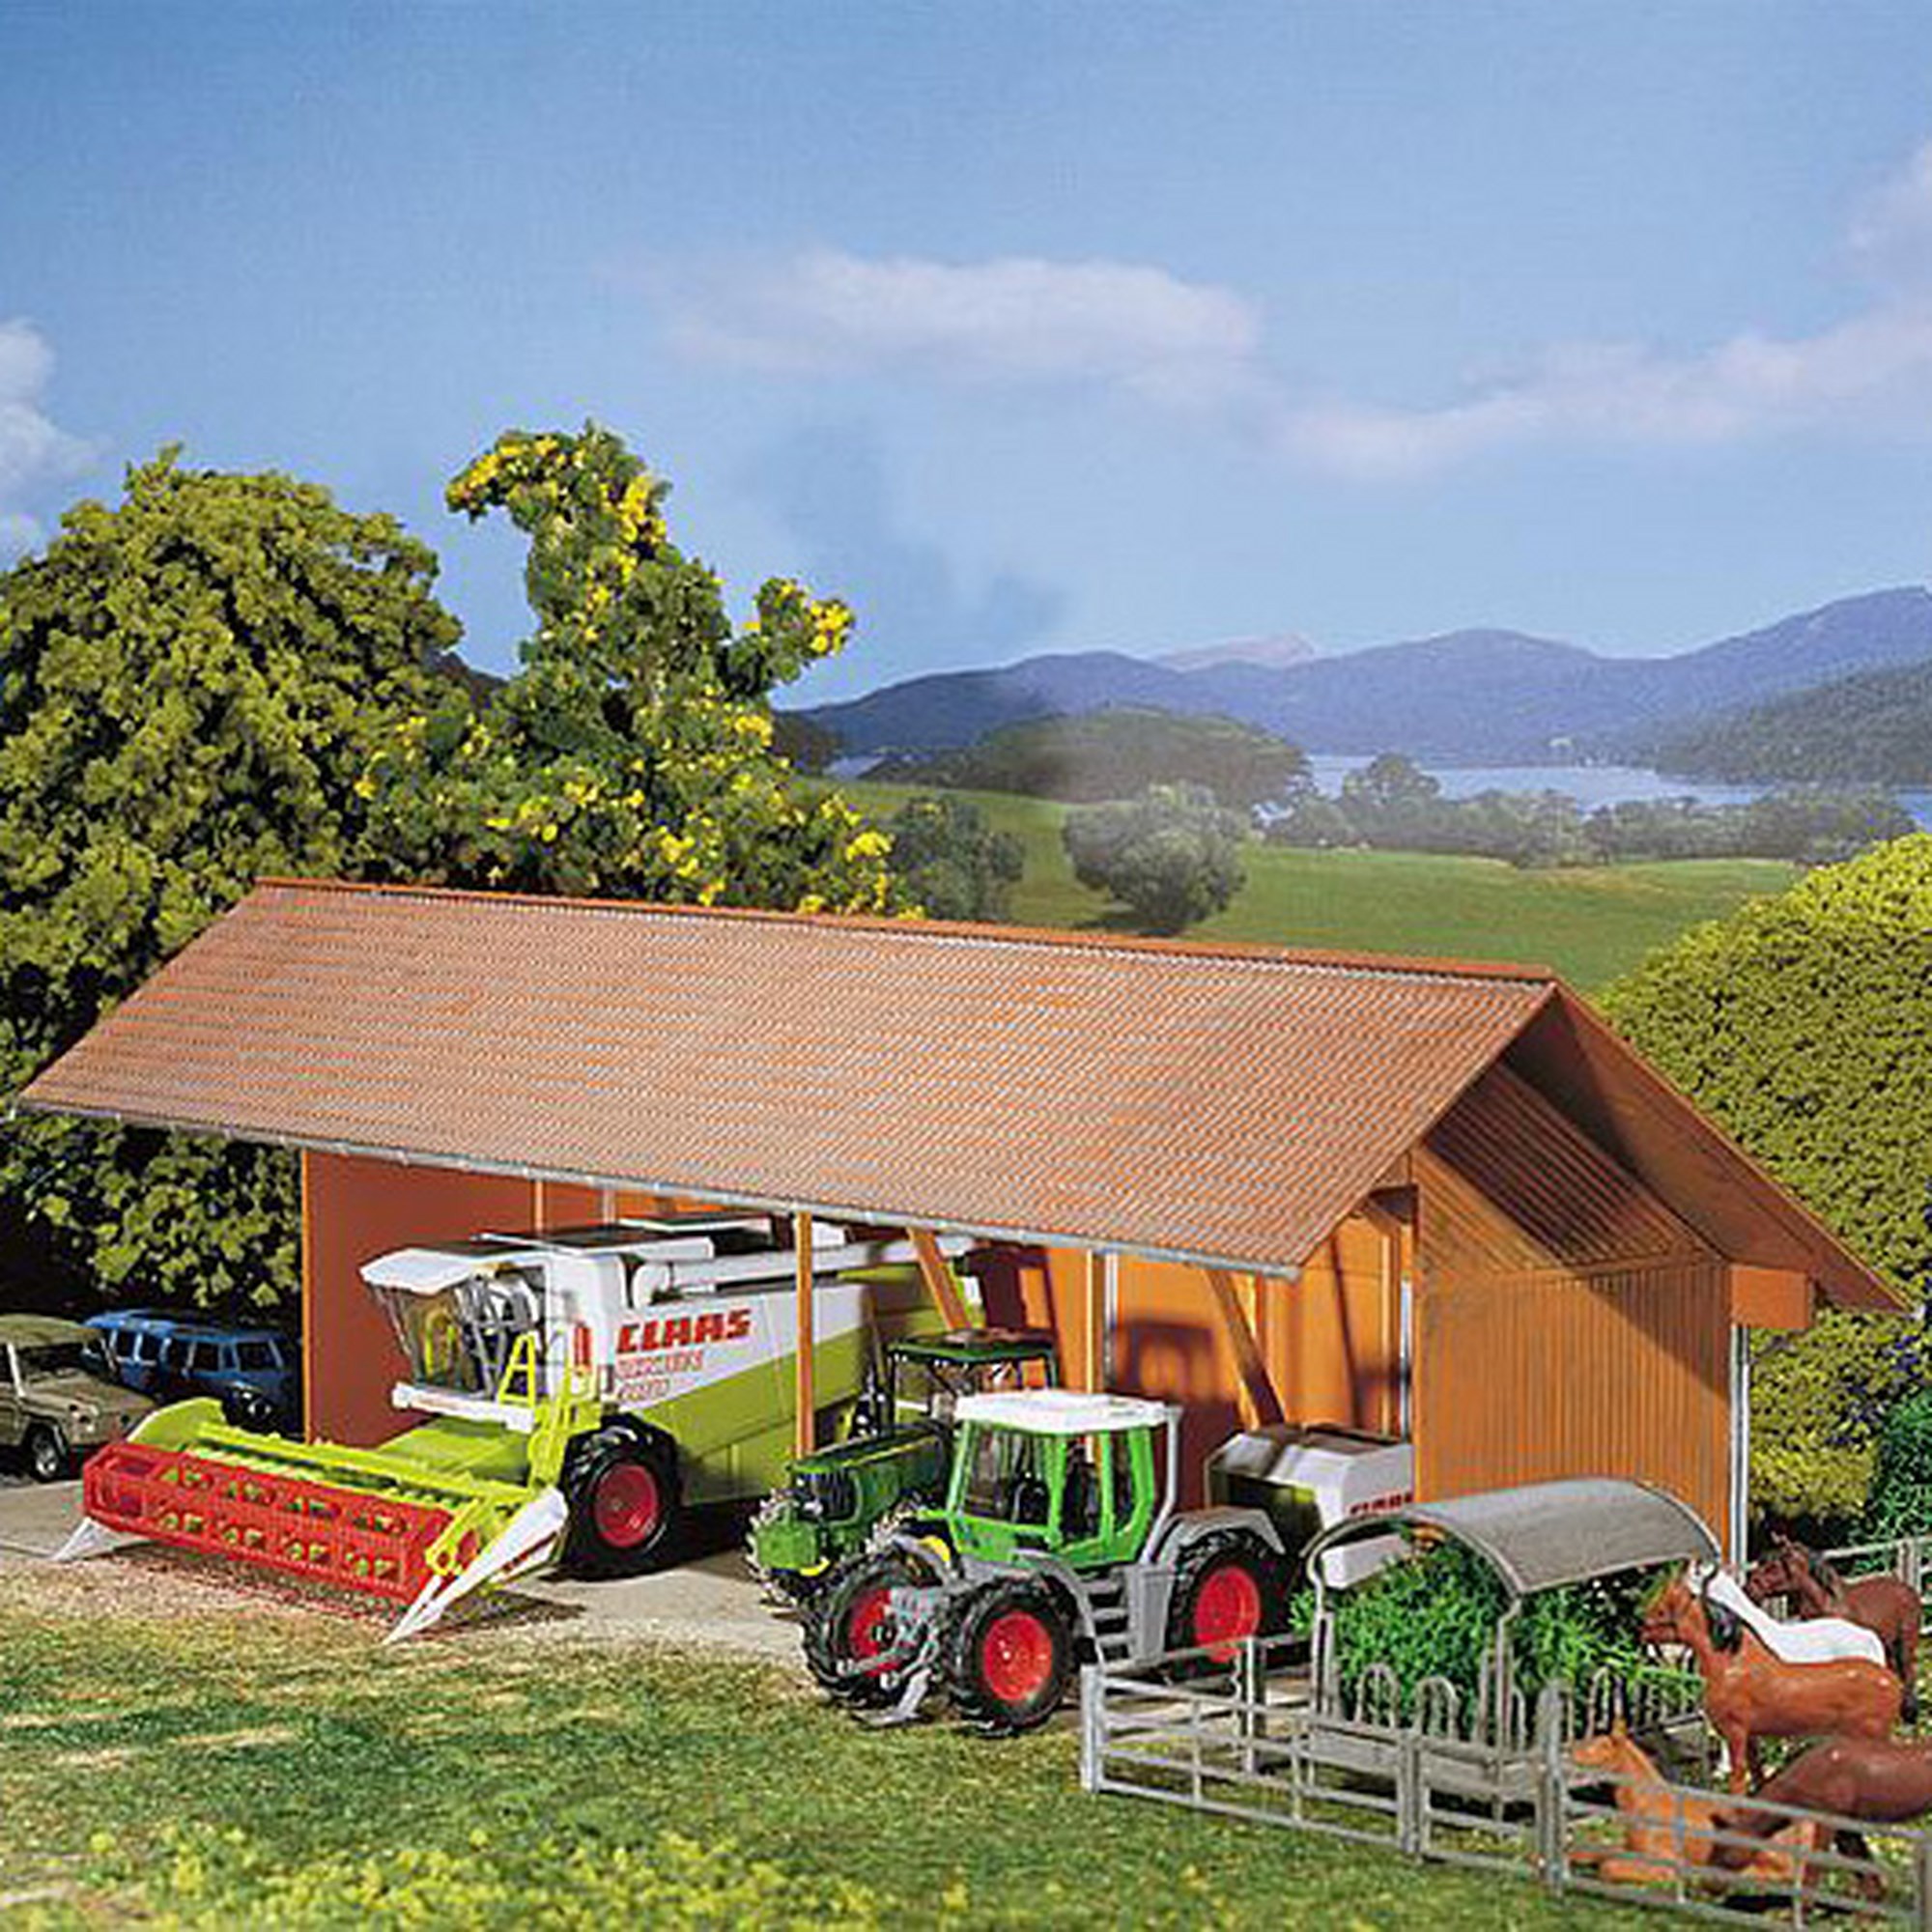 Hangar agricole HO FALLER 130521 modelisme ferroviaire diorama